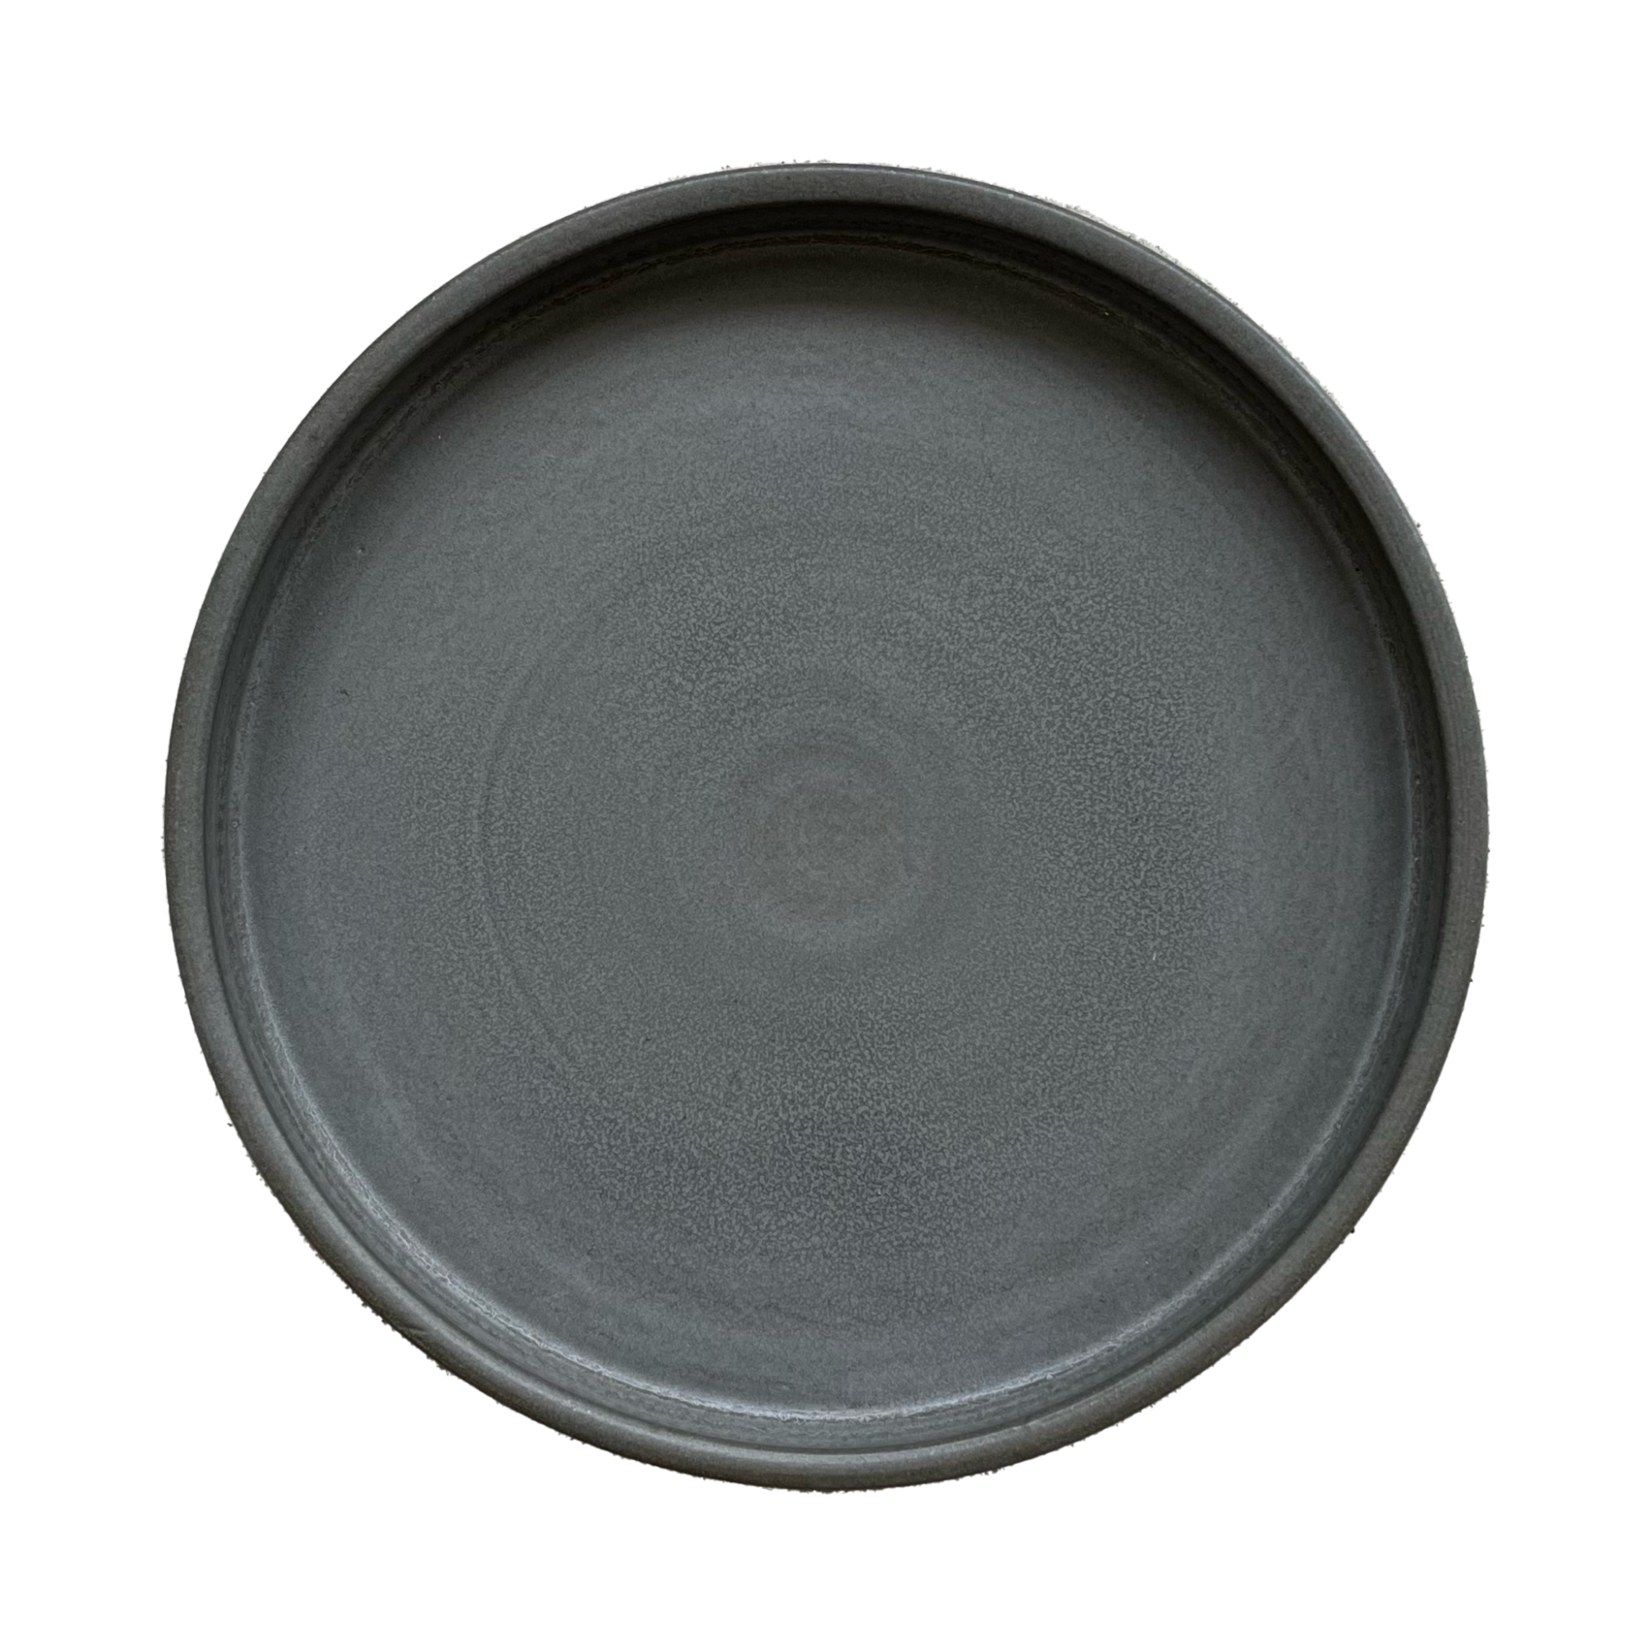 Sheldon Ceramics Sheldon - Coupe Tray - Medium - Charcoal